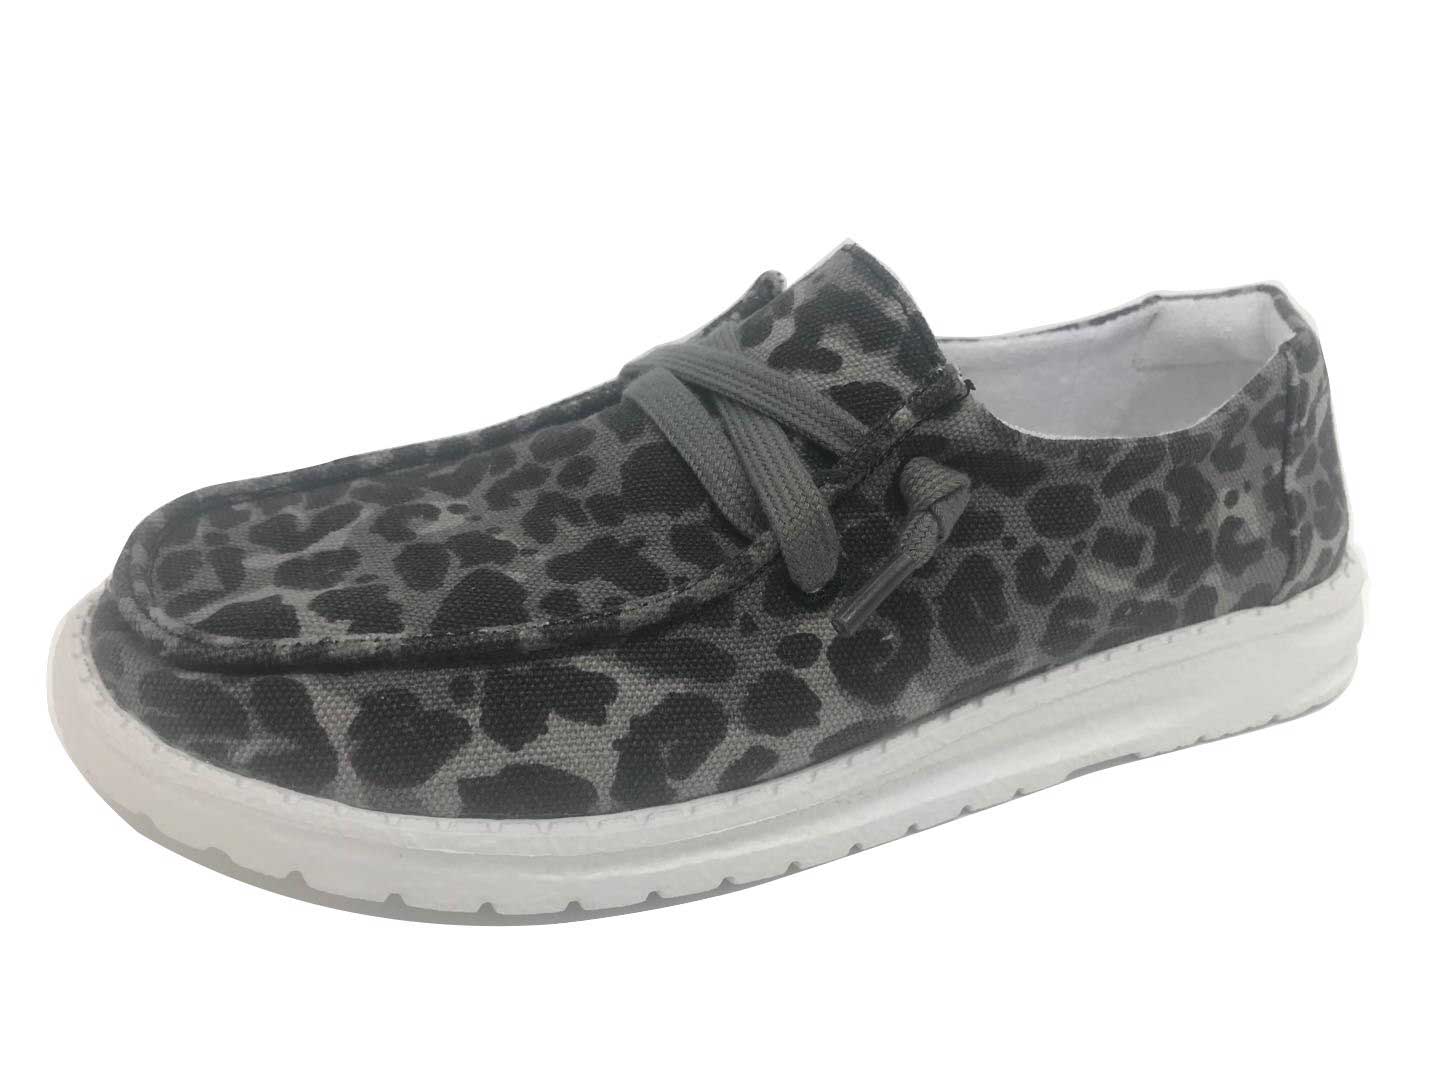 Gypsy Jazz Shoes Cheetah Grey